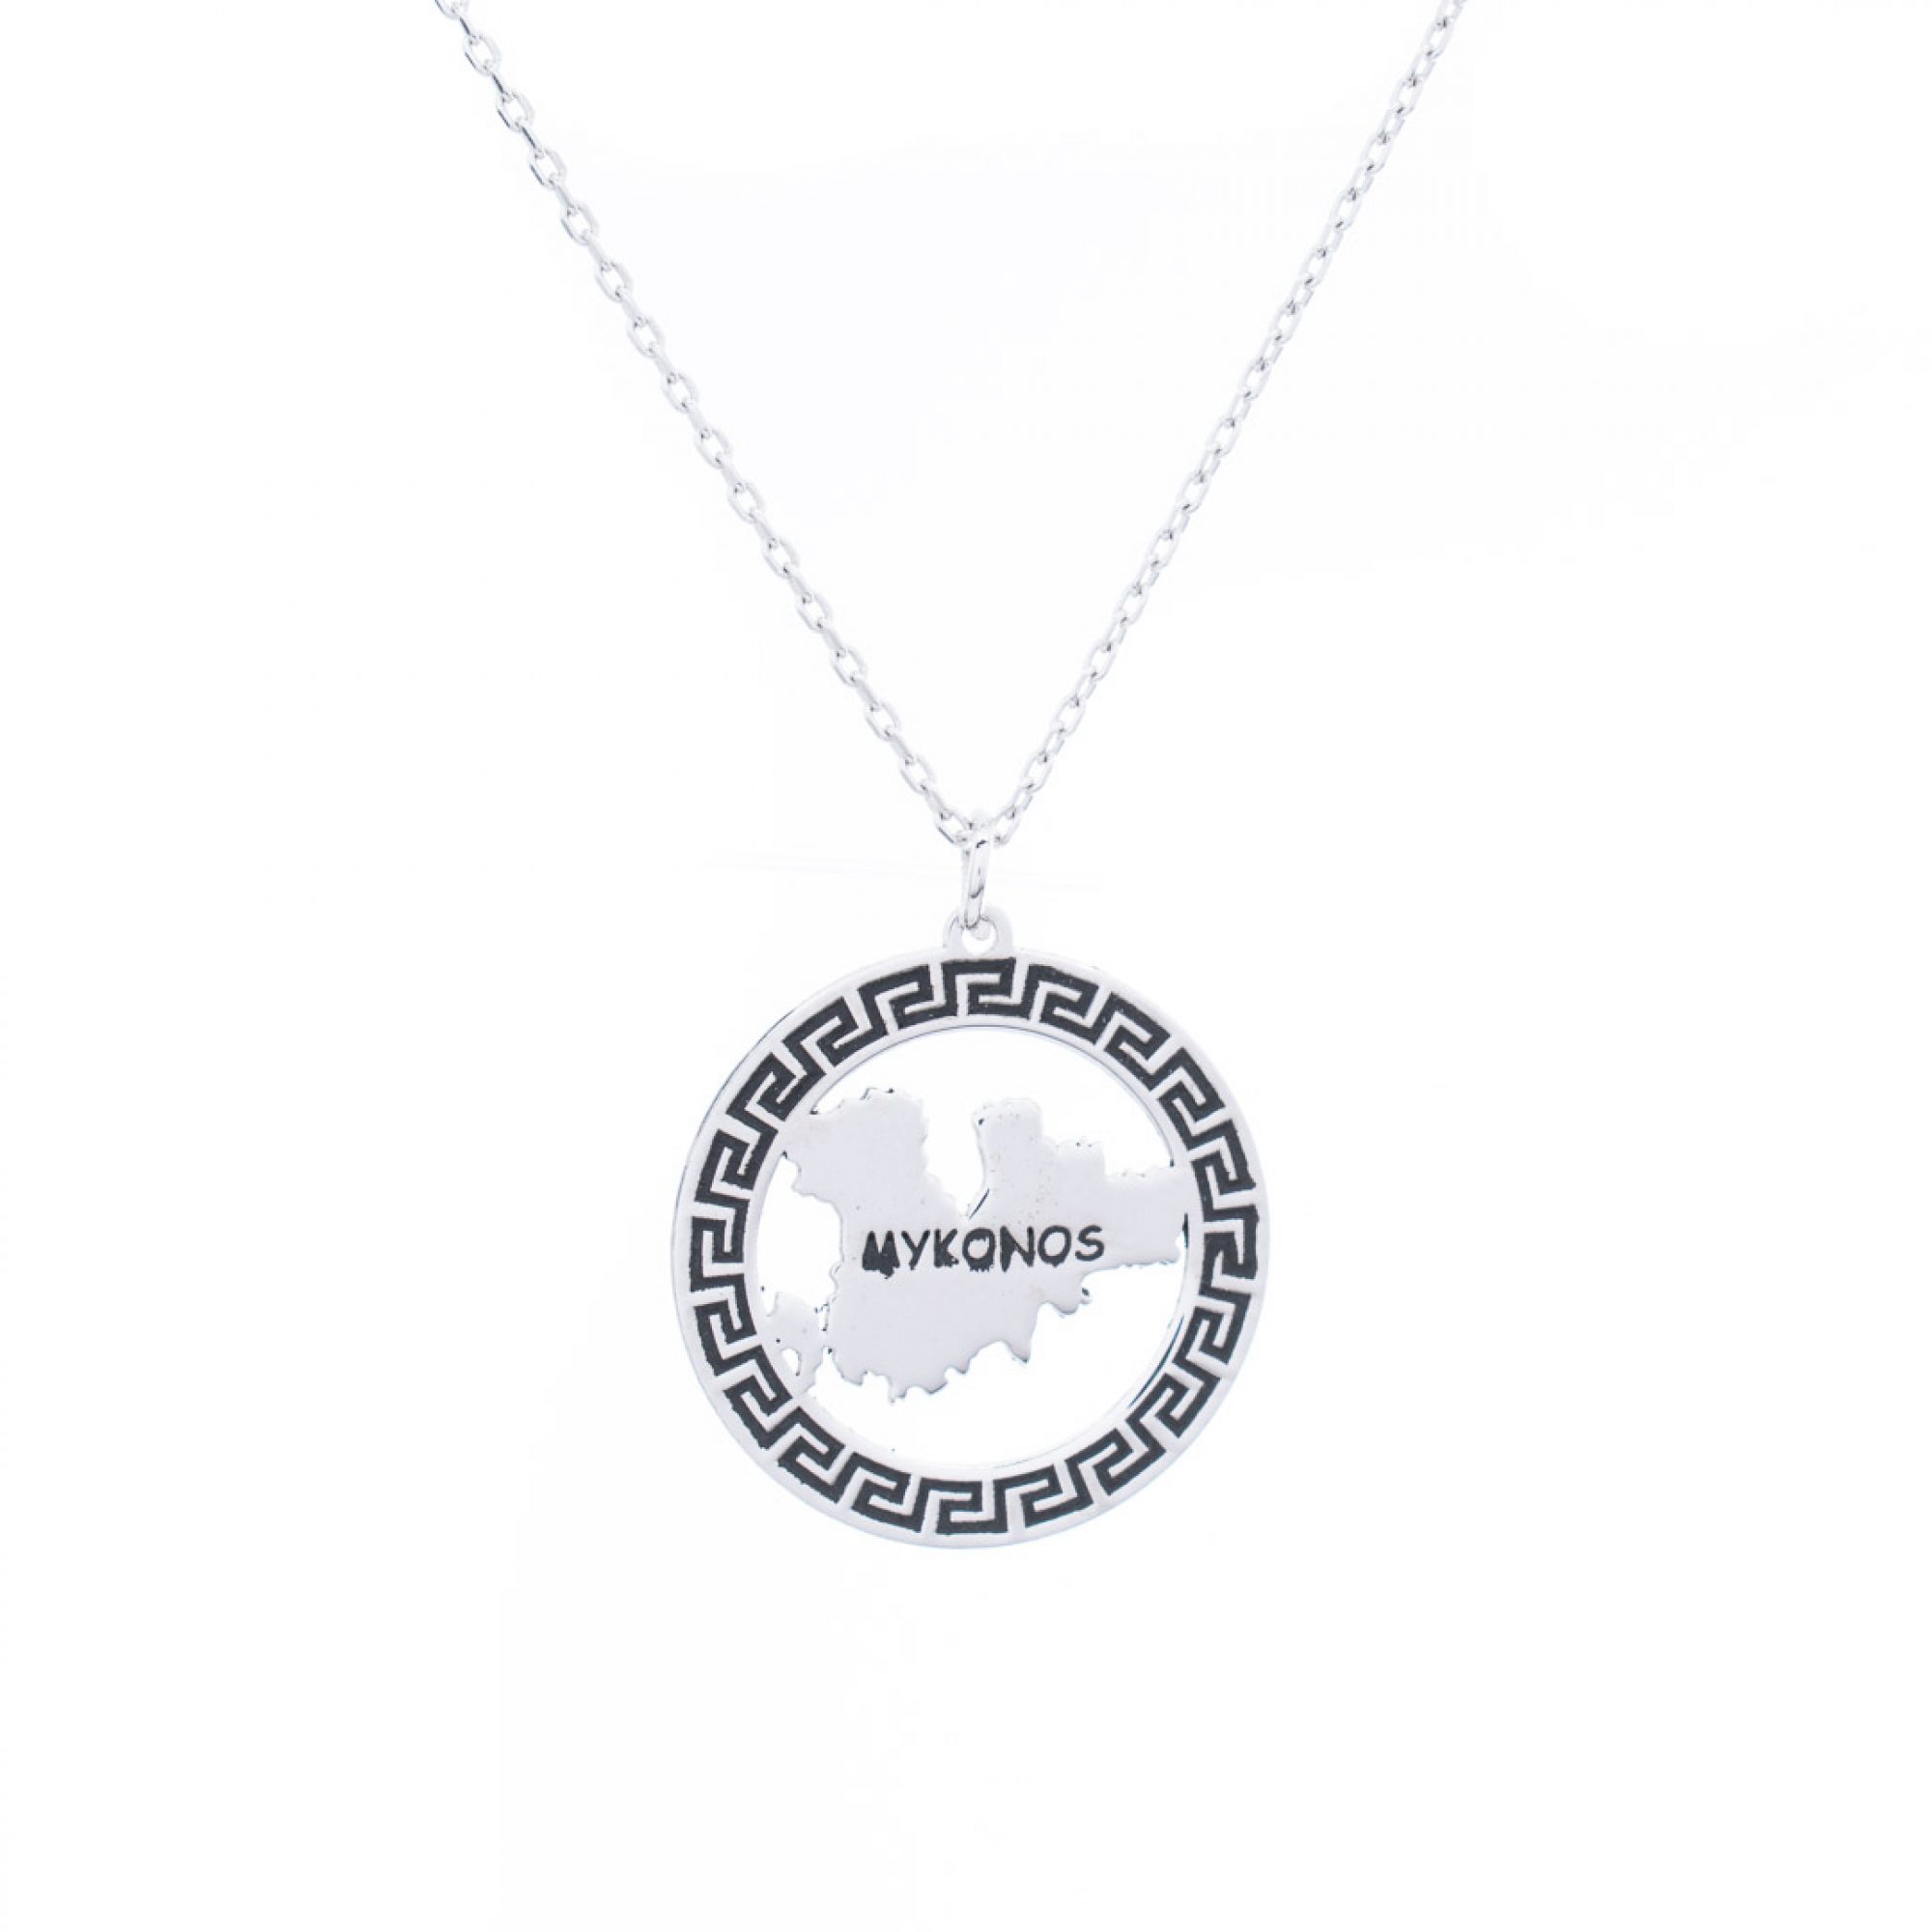 Mykonos necklace with meander